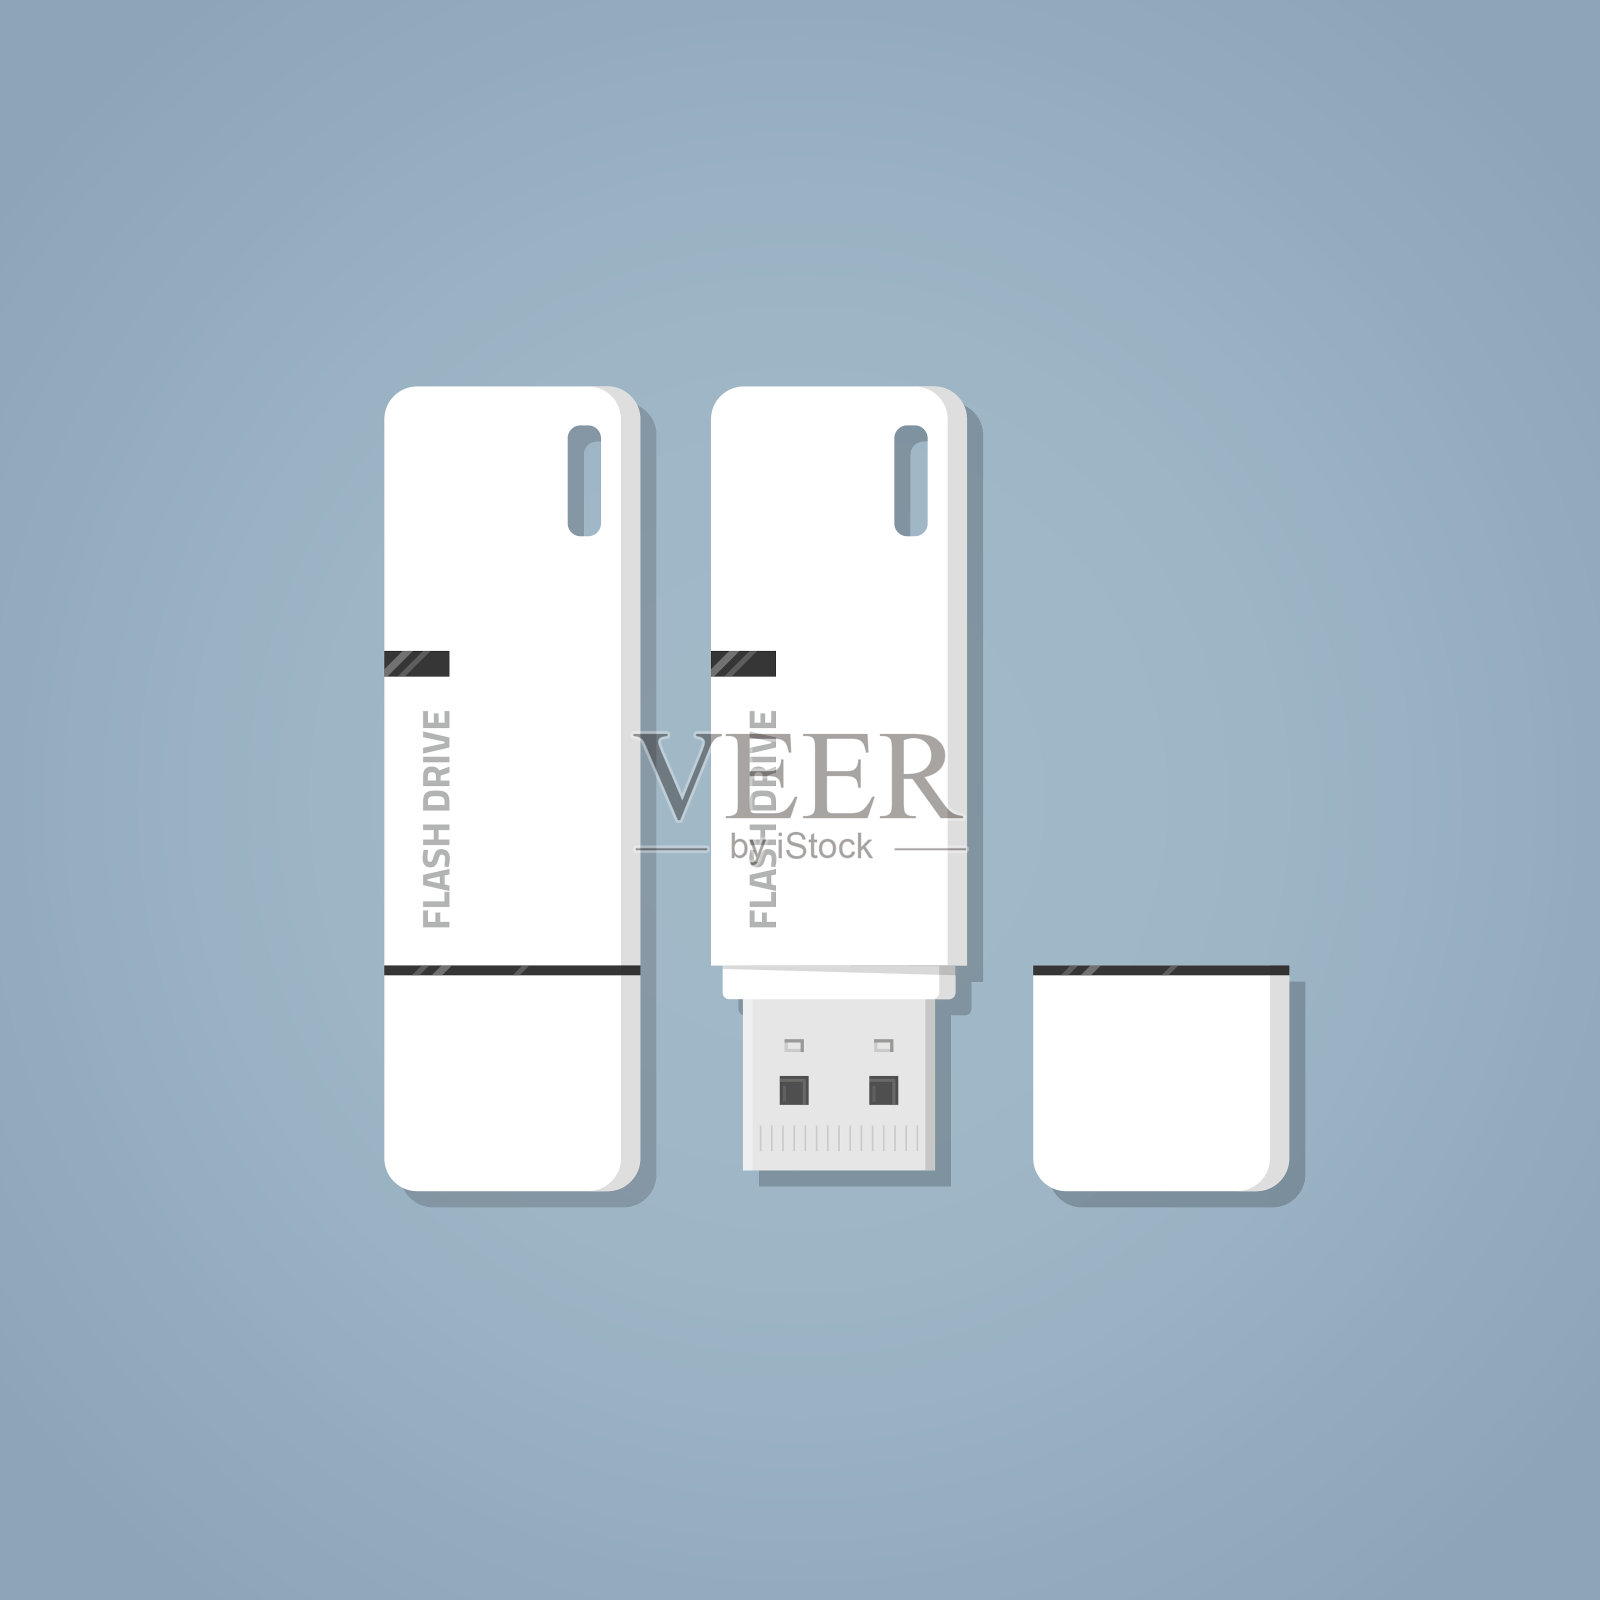 USB闪存驱动器设计模板素材